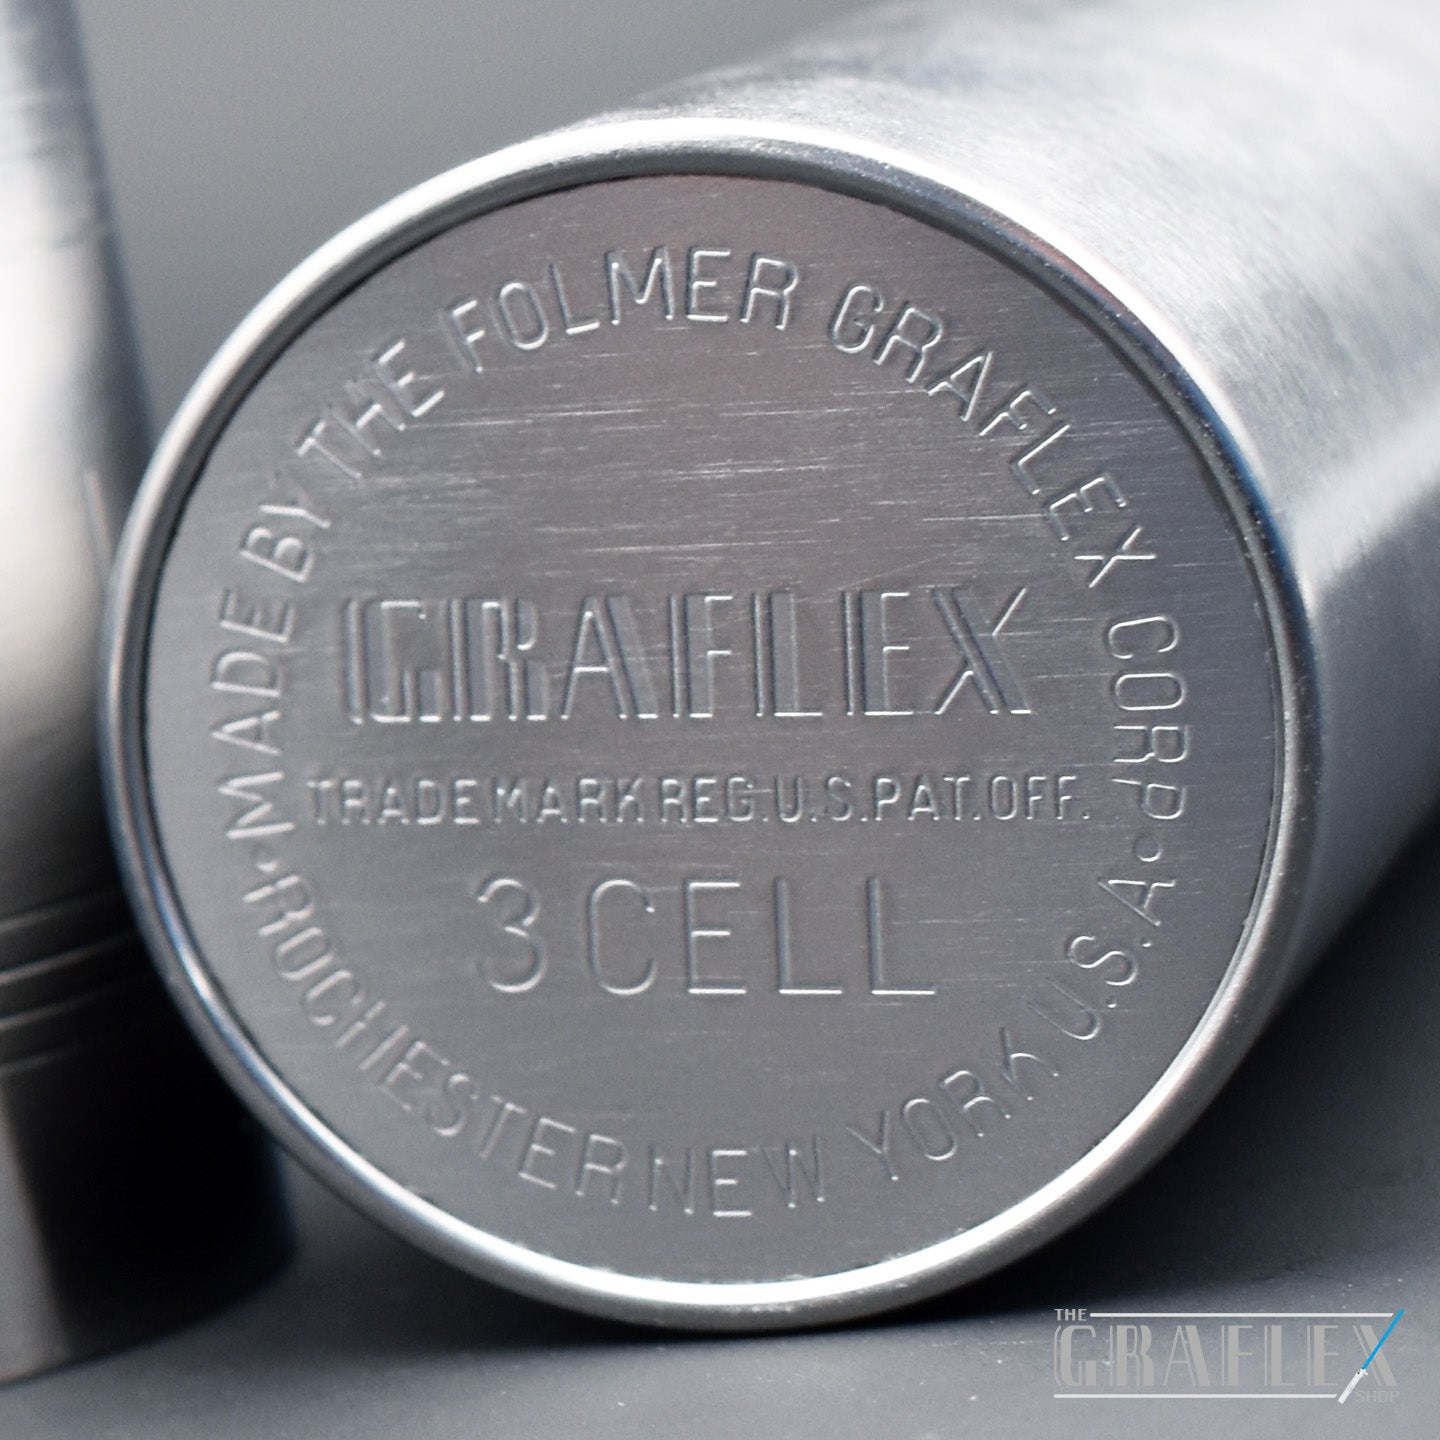 Graflex 3 Cell Flash - Folmer No Patent